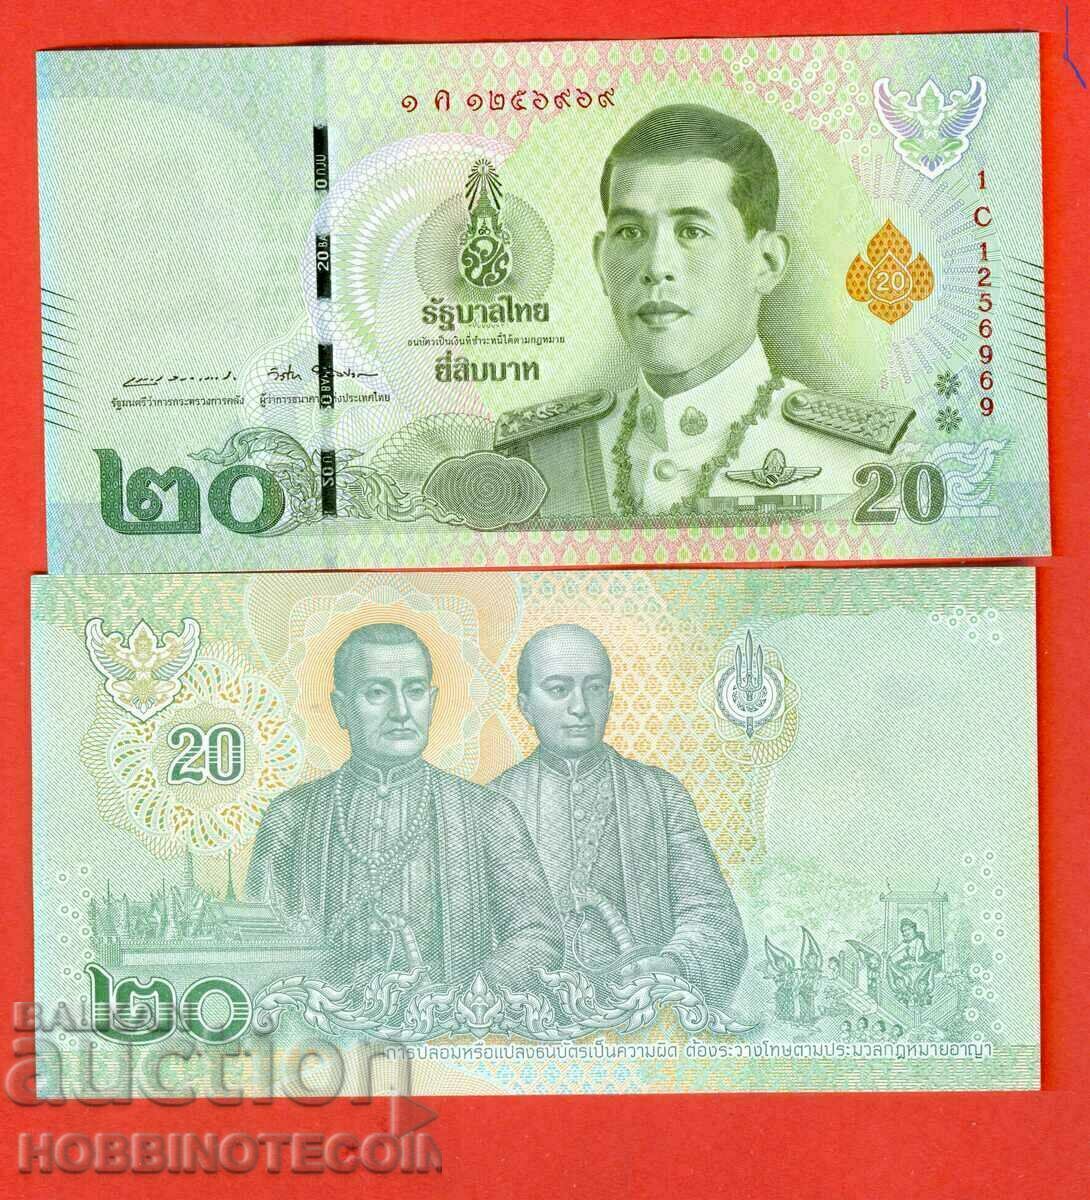 THAILAND THAILAND 20 BATA NOU REGAT 2 text 2018 NEW UNC